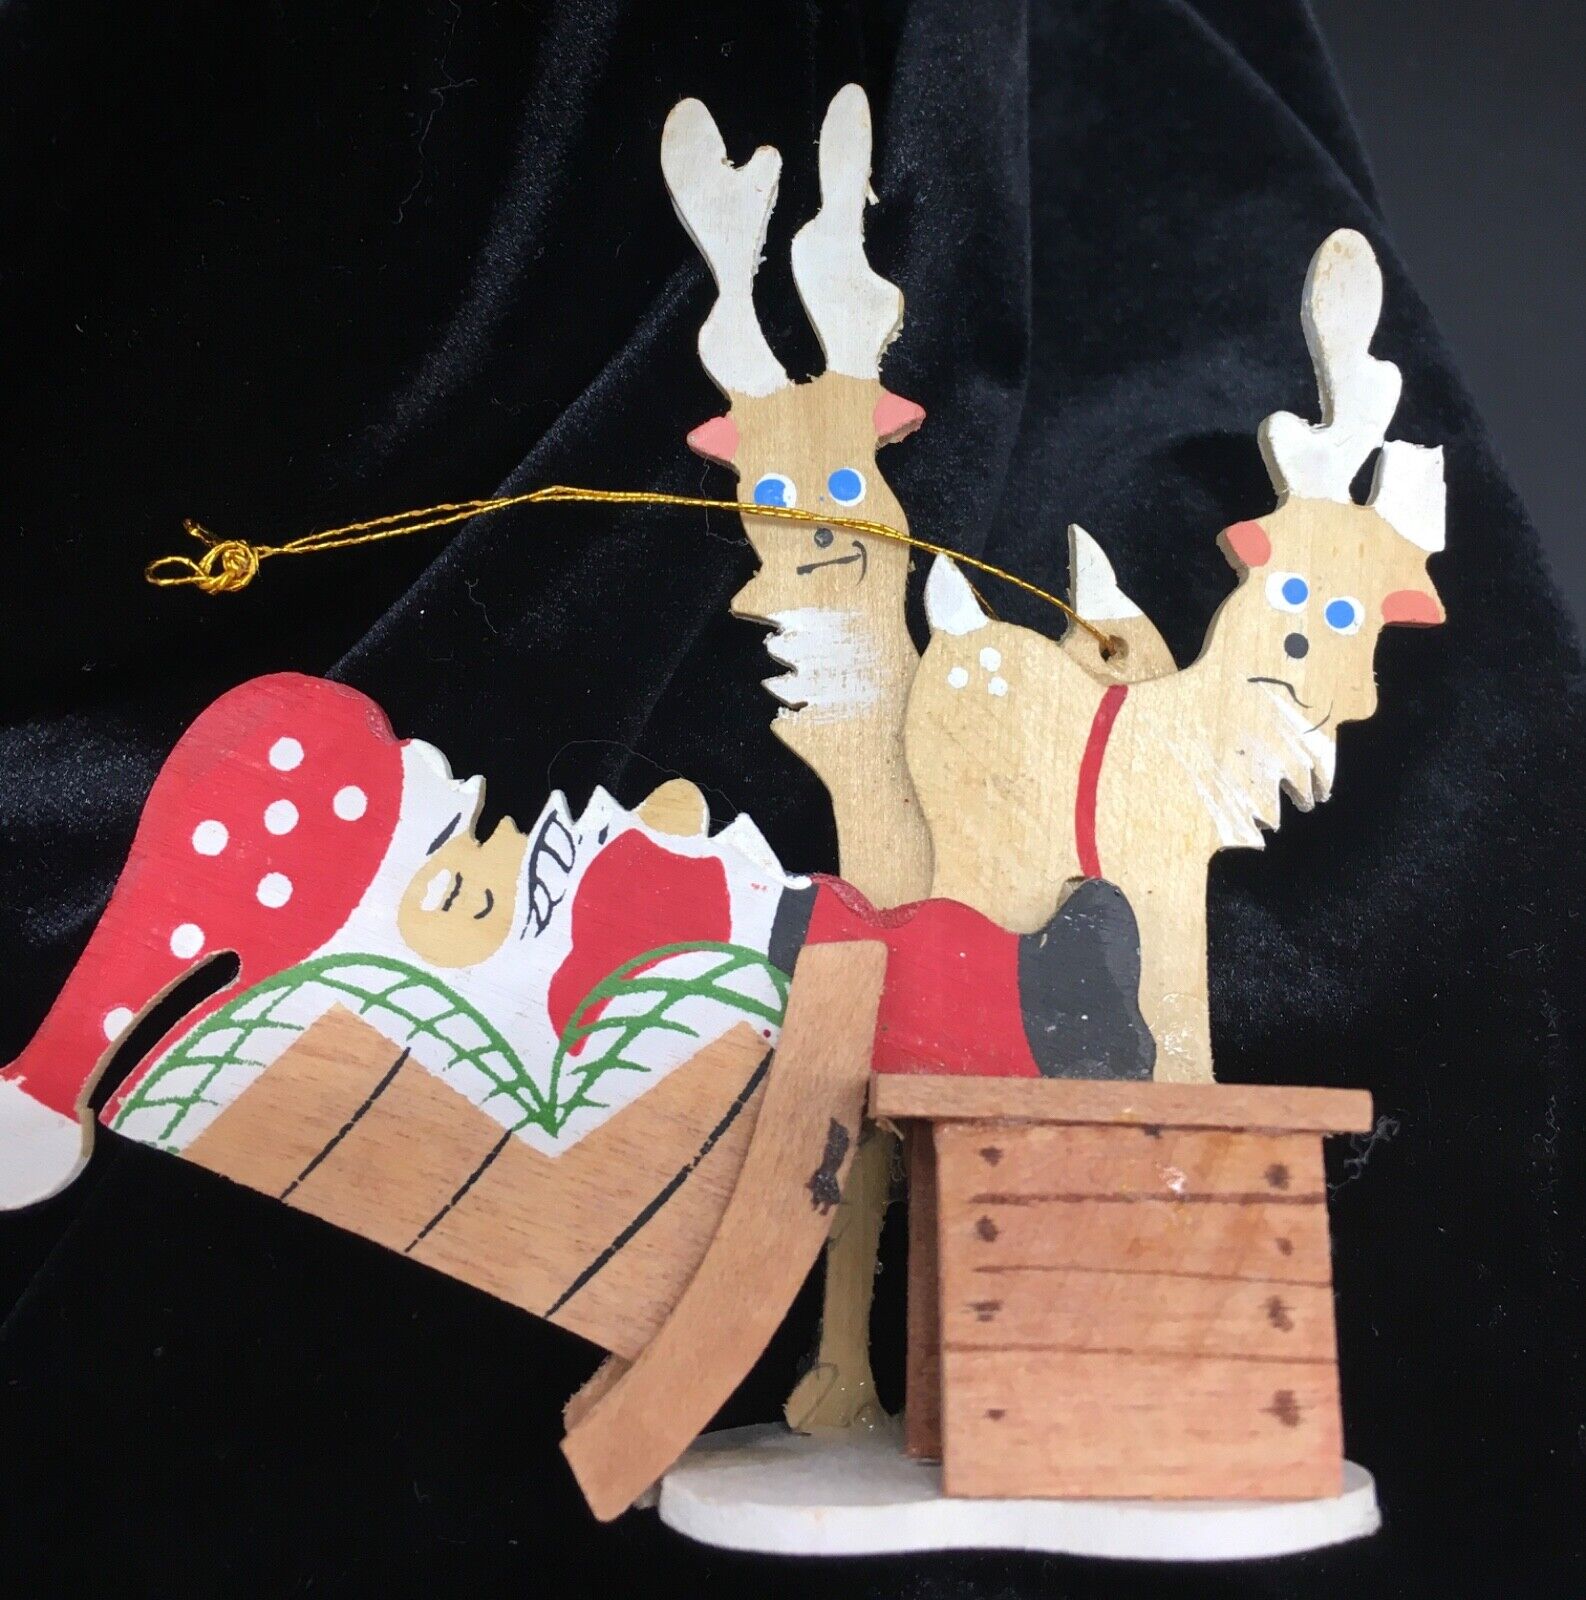 Christmas ornament Schmid EMGEE 4.25” wooden Santa feet up on his desk & 2 deer